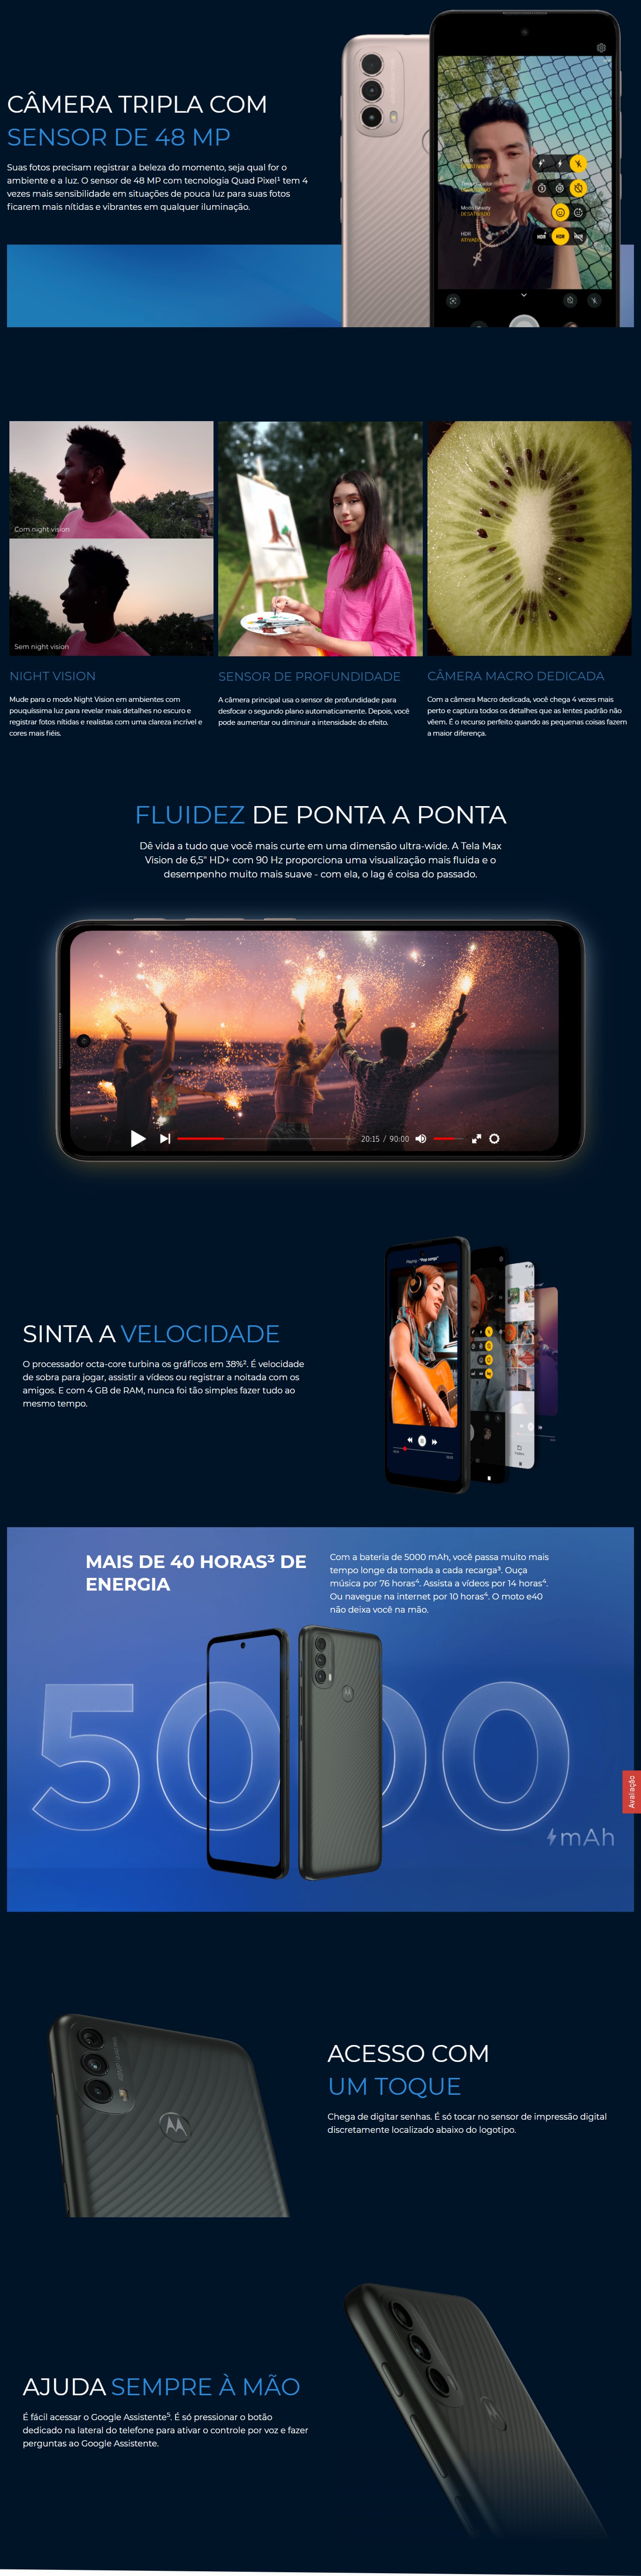 Smartphone Motorola Moto E40 Xt21591 64gb, Lojas ZL